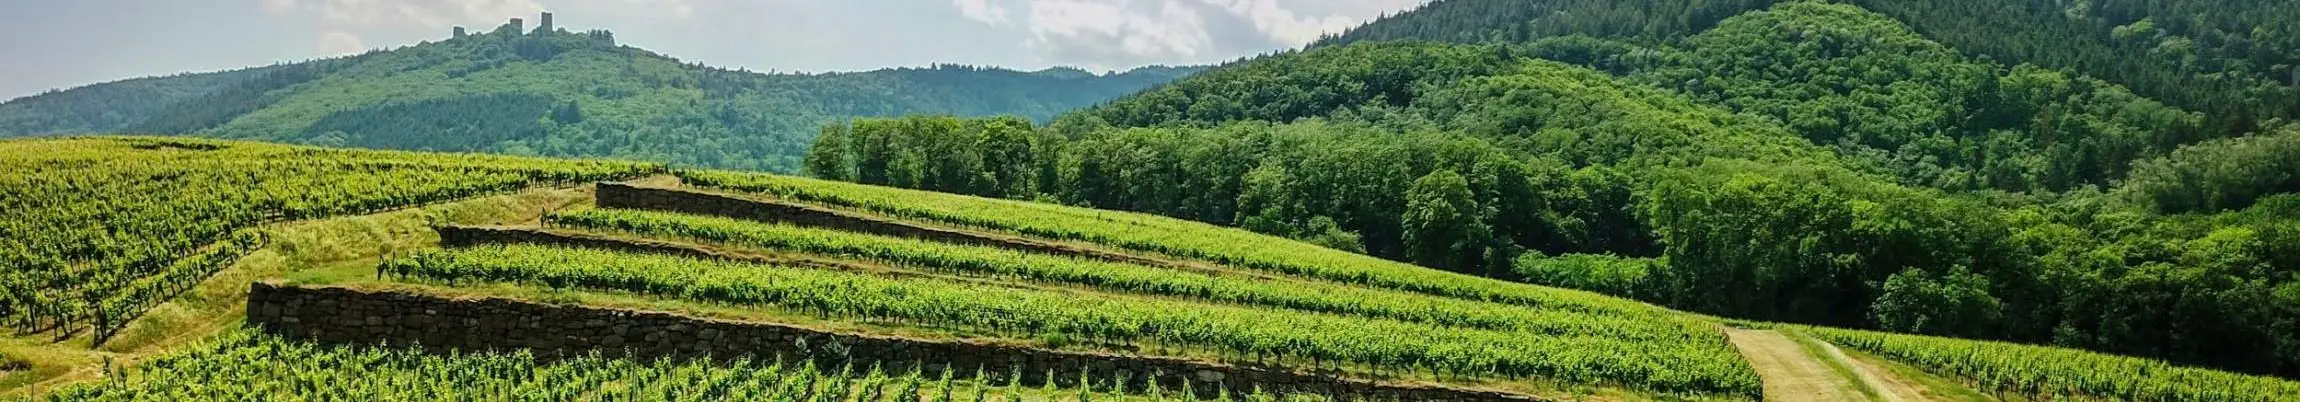 Domaine Barms-Buecher Grands Vins Alsace en Biodynamie